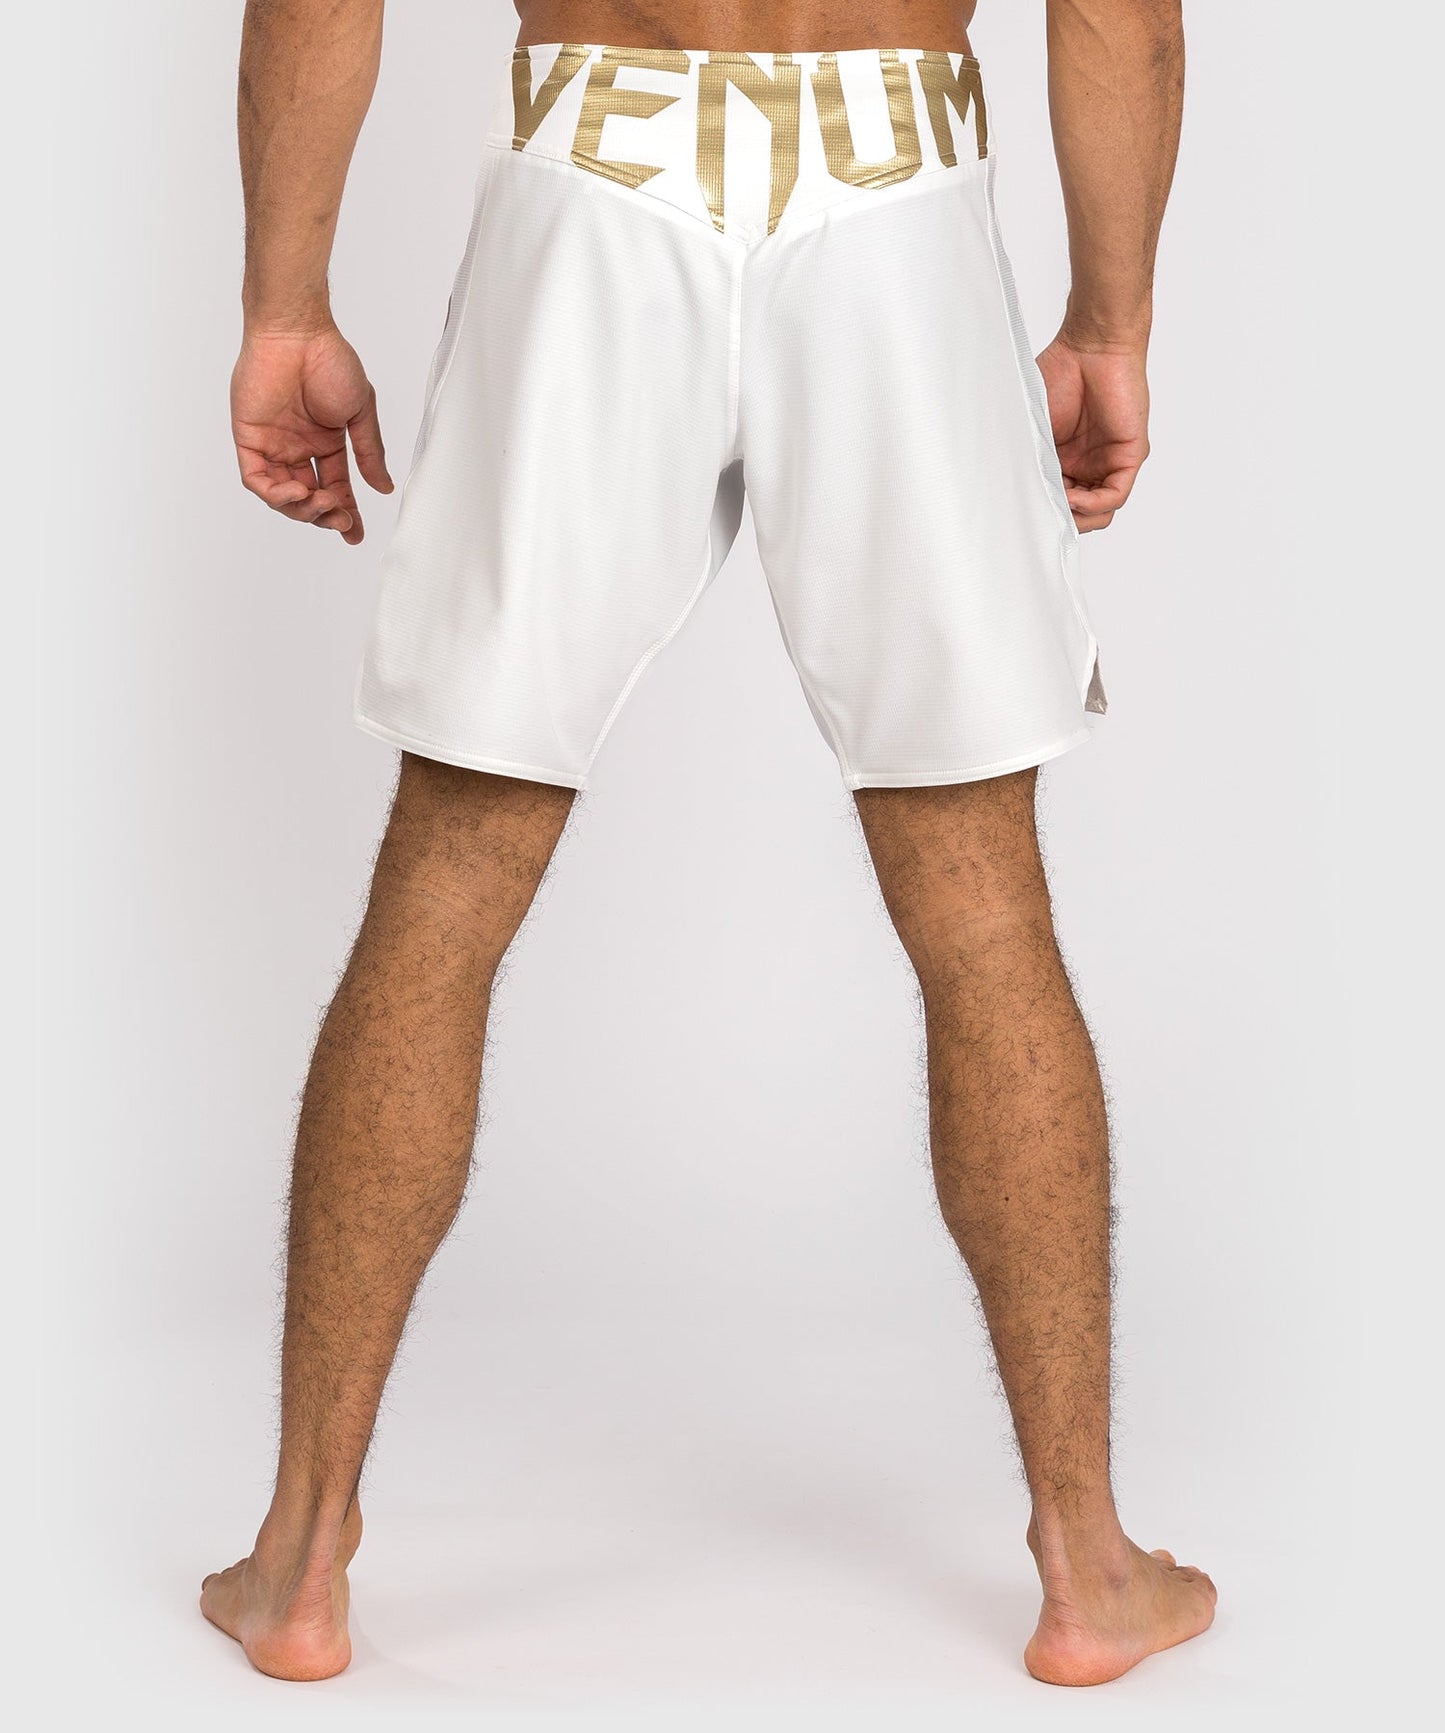 Venum Light 5.0 Fight Shorts - Weiß/Gold